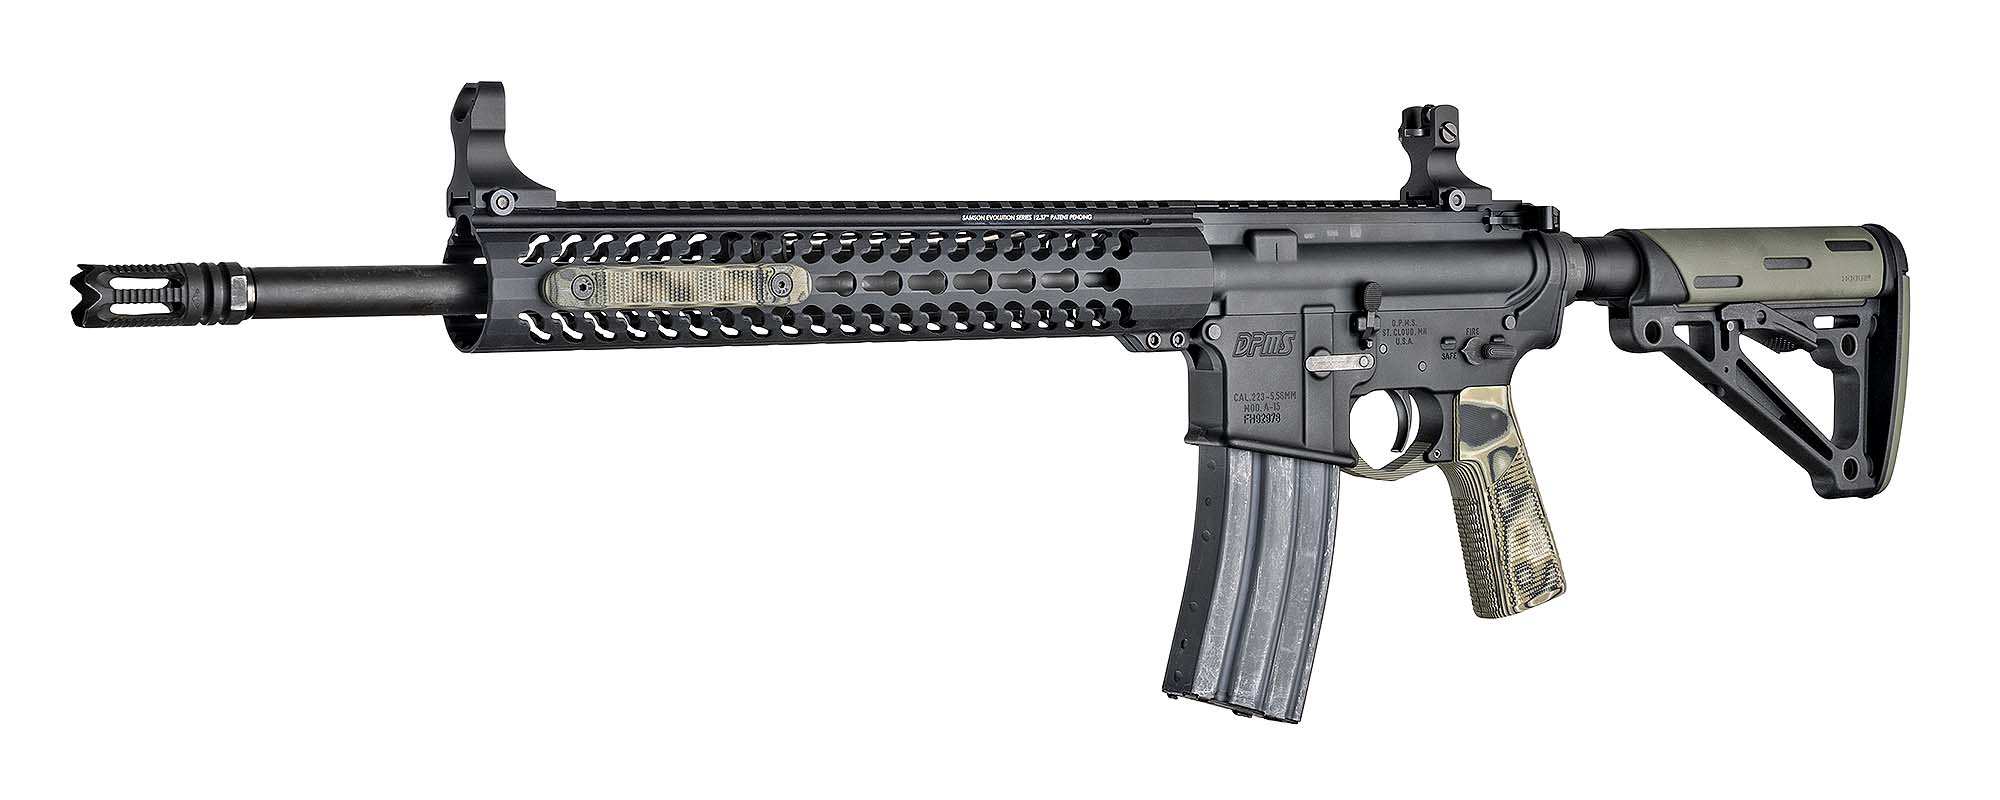 Hogue G10 KeyMod rail covers for AR rifles. 